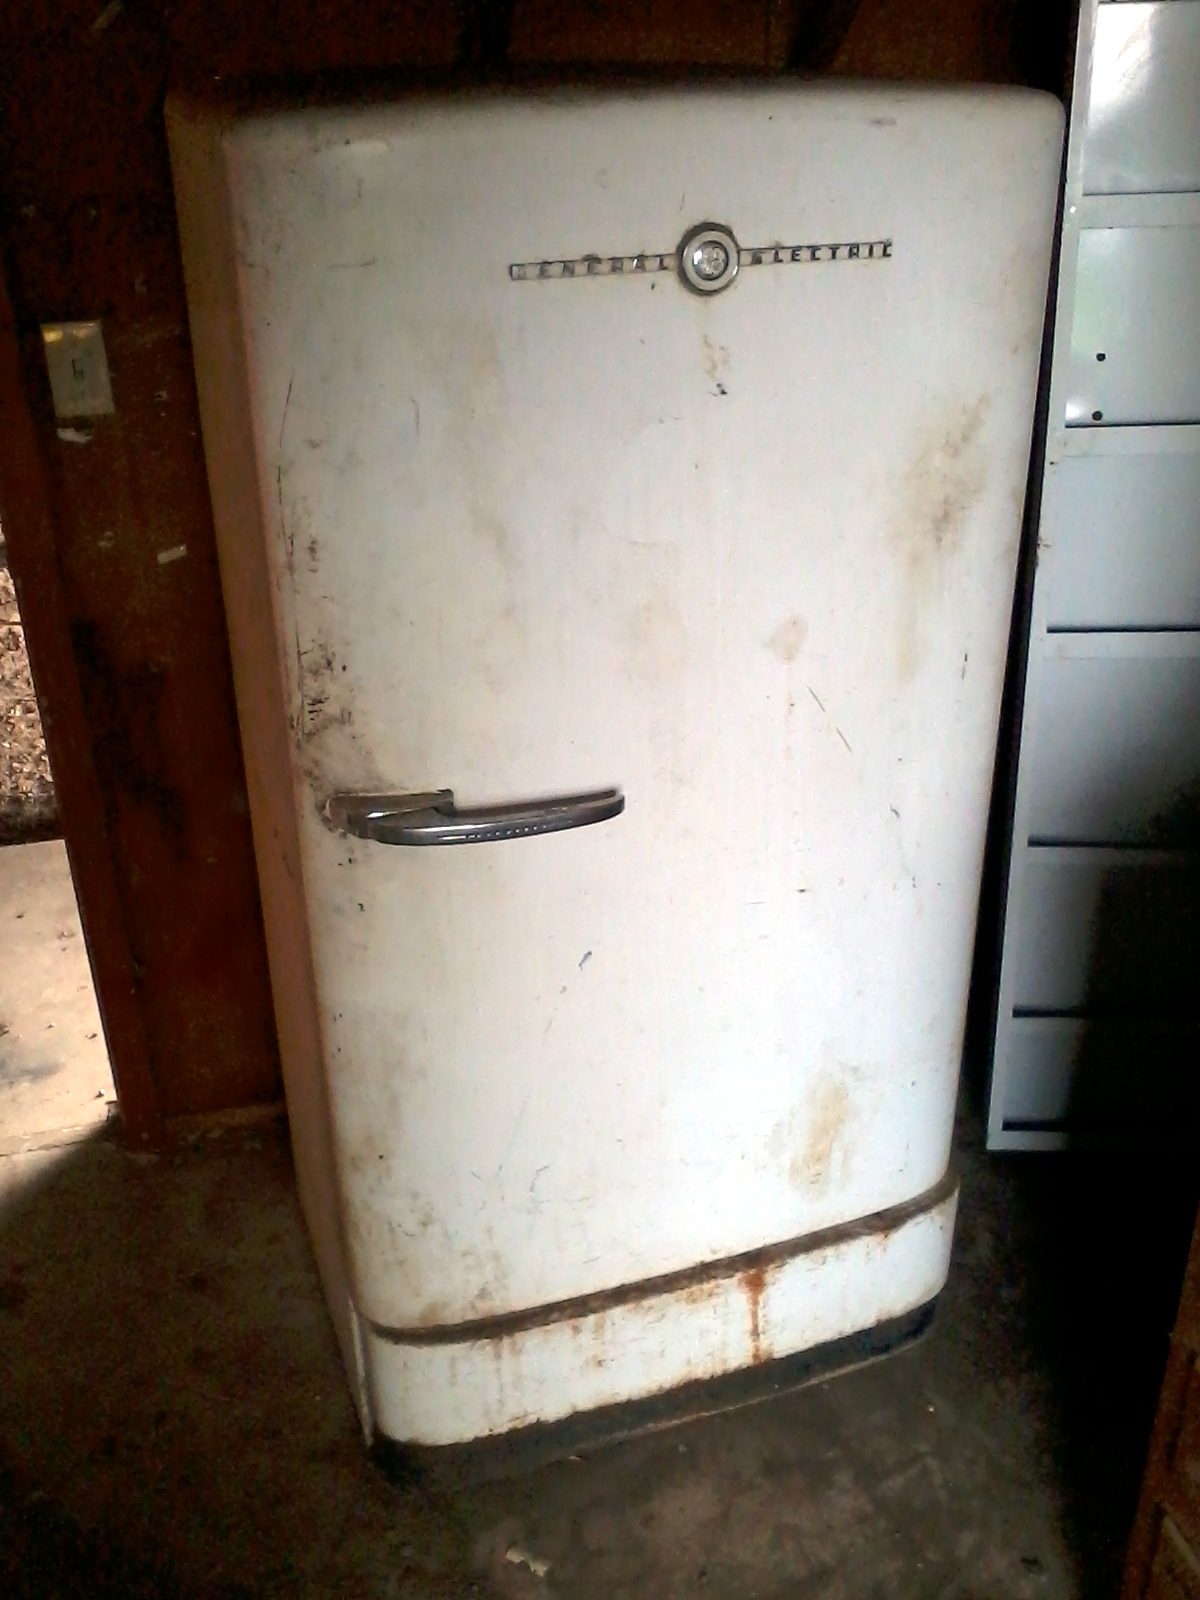 kd5tkr-s-techblog-vintage-refrigerator-kegerator-conversion